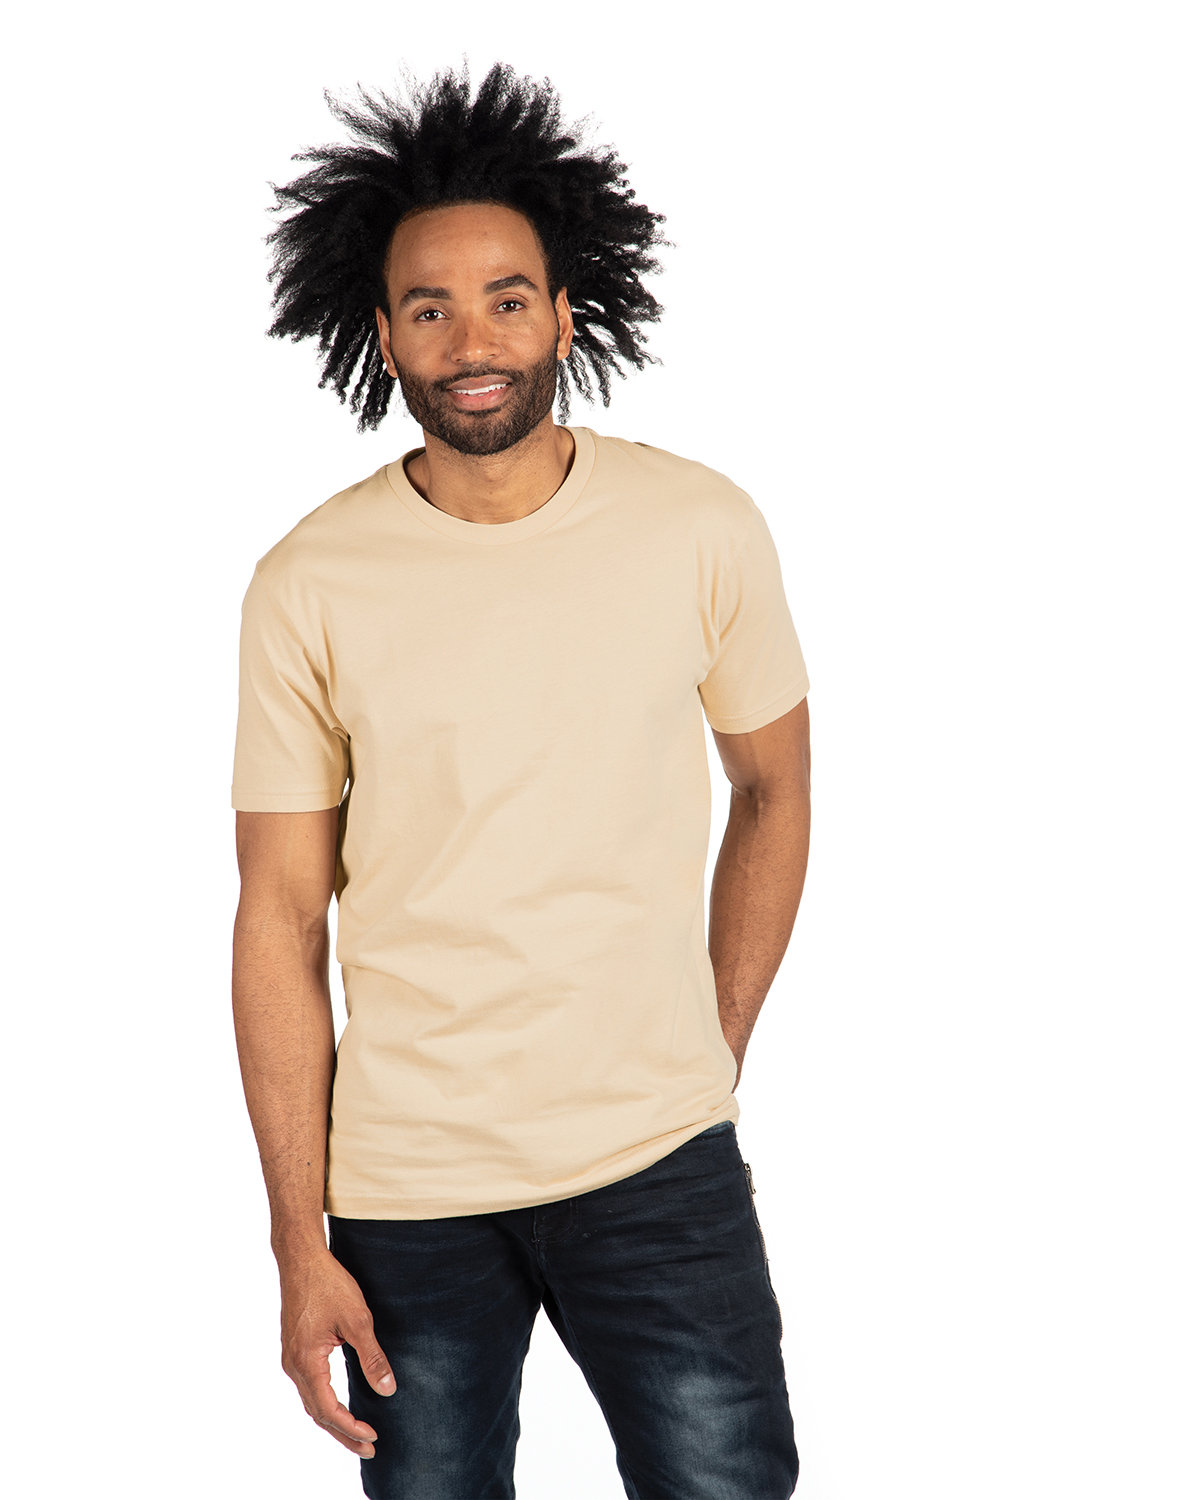 Next Level Unisex Cotton T-Shirt CREAM 